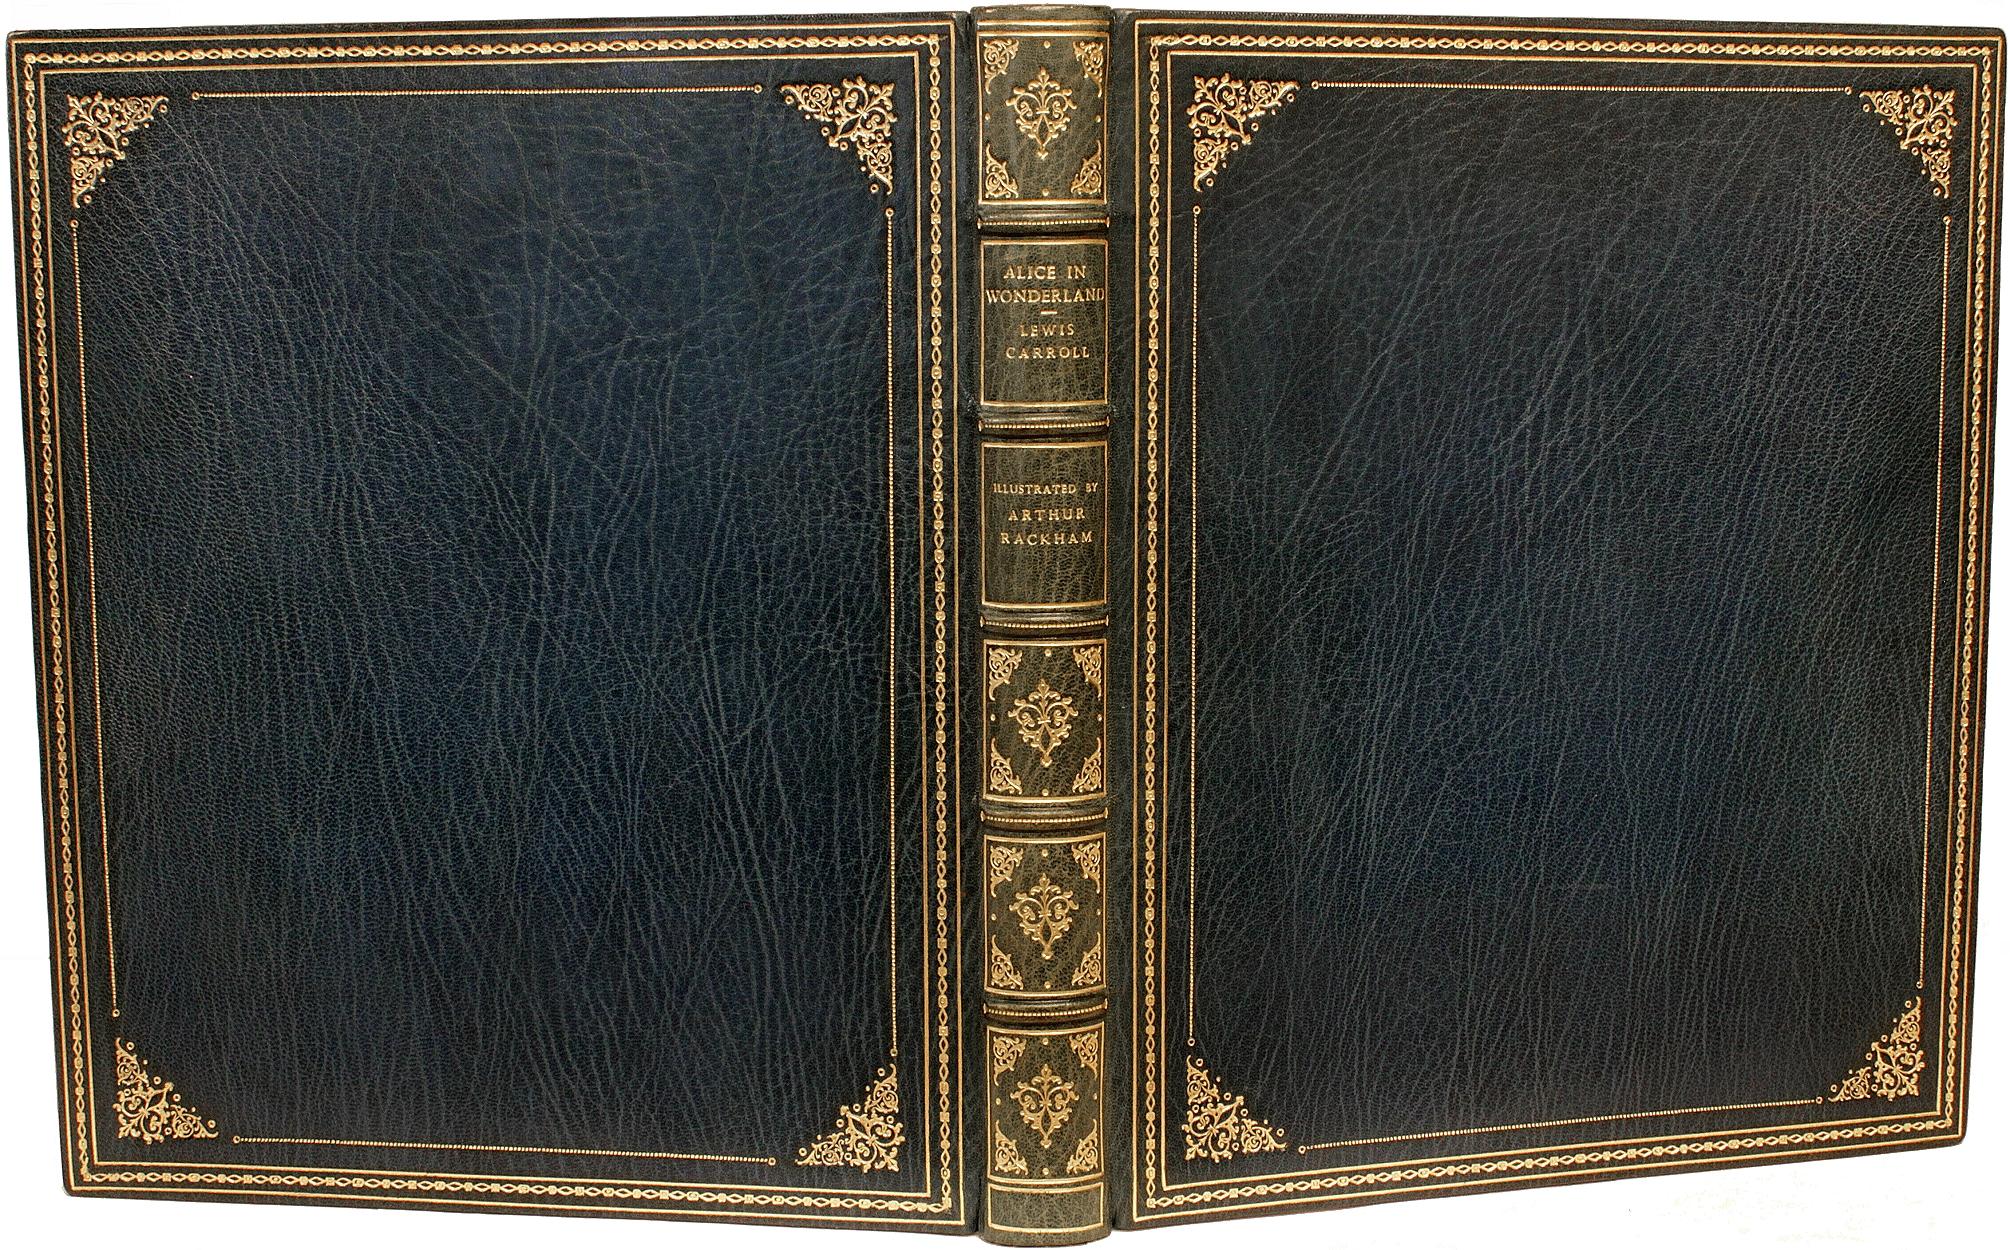 AUTHOR: DODGSON, Charles L. (Lewis Carroll) (Arthur Rackham). 

TITLE: Alice's Adventures In Wonderland.

PUBLISHER: London: William Heinemann, 1907.

DESCRIPTION: LIMITED EDITION. 1 vol., 11-1/4